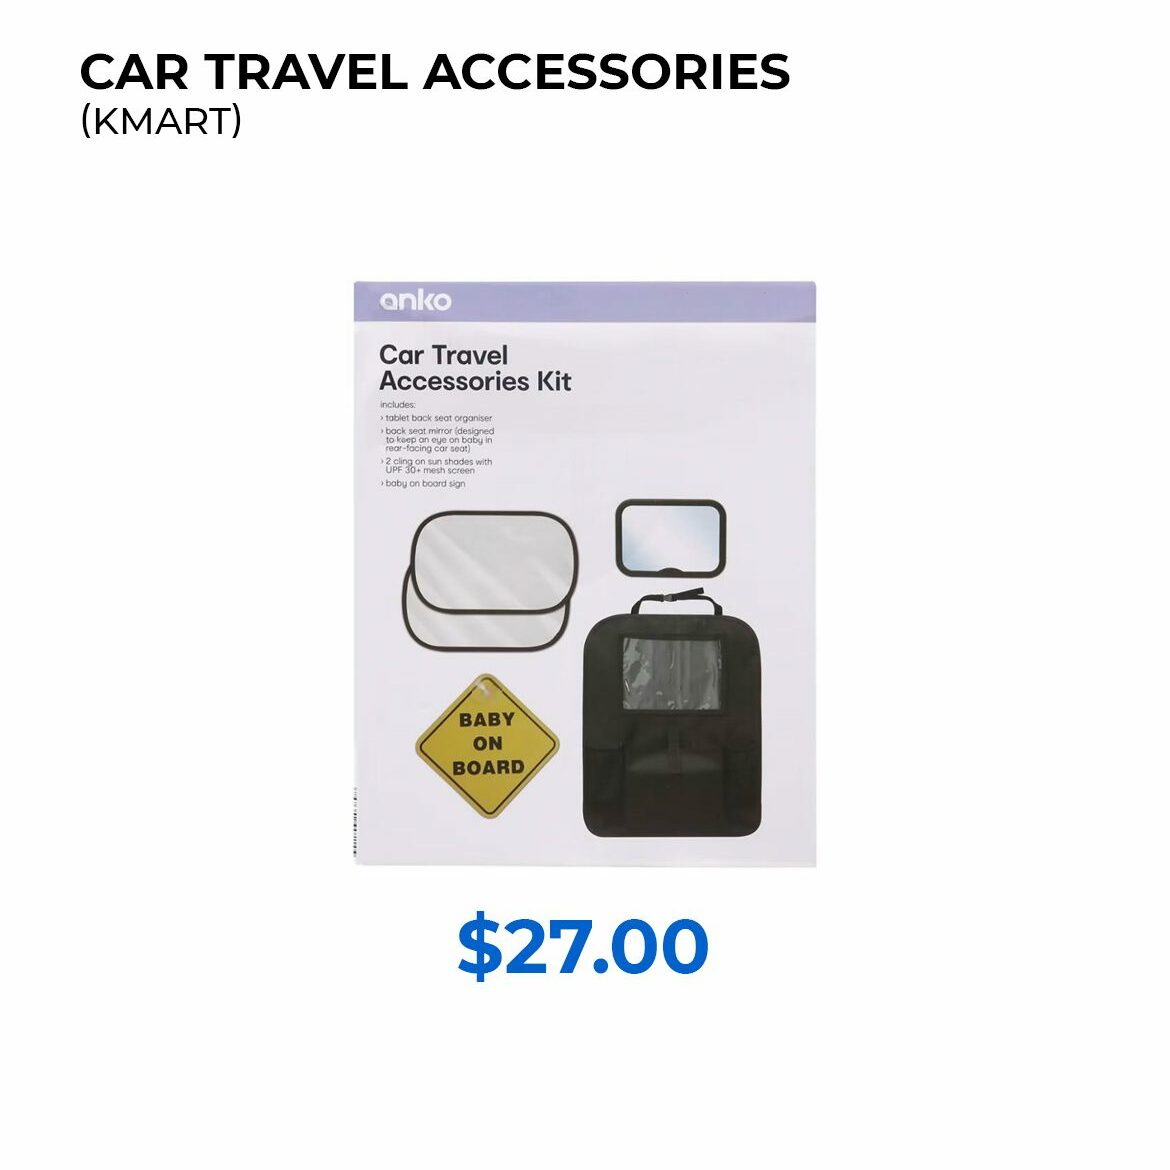 Car travel accessories